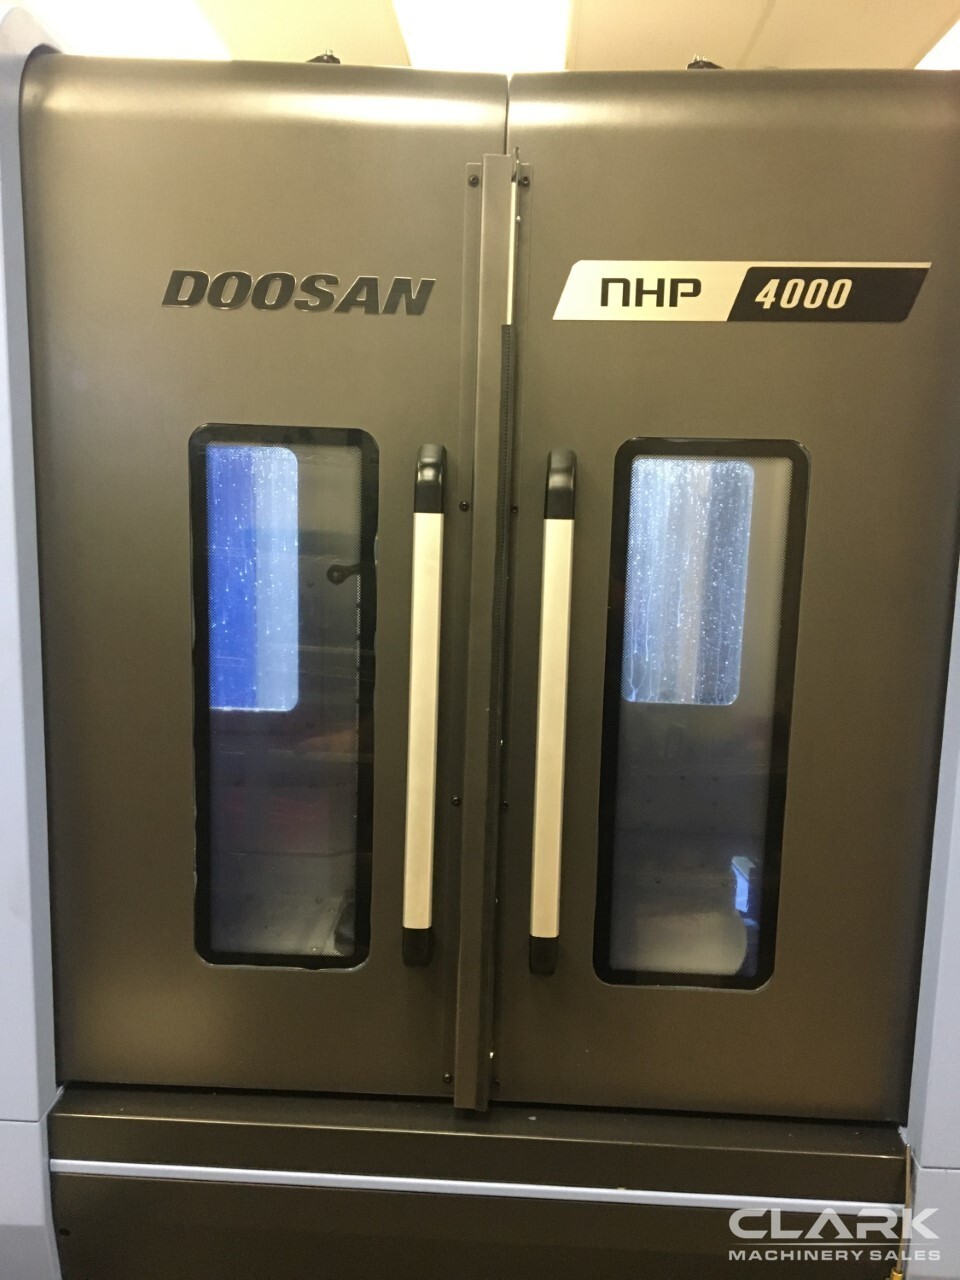 2020 DOOSAN NHP 4000 Horizontal Machining Centers | Clark Machinery Sales, LLC